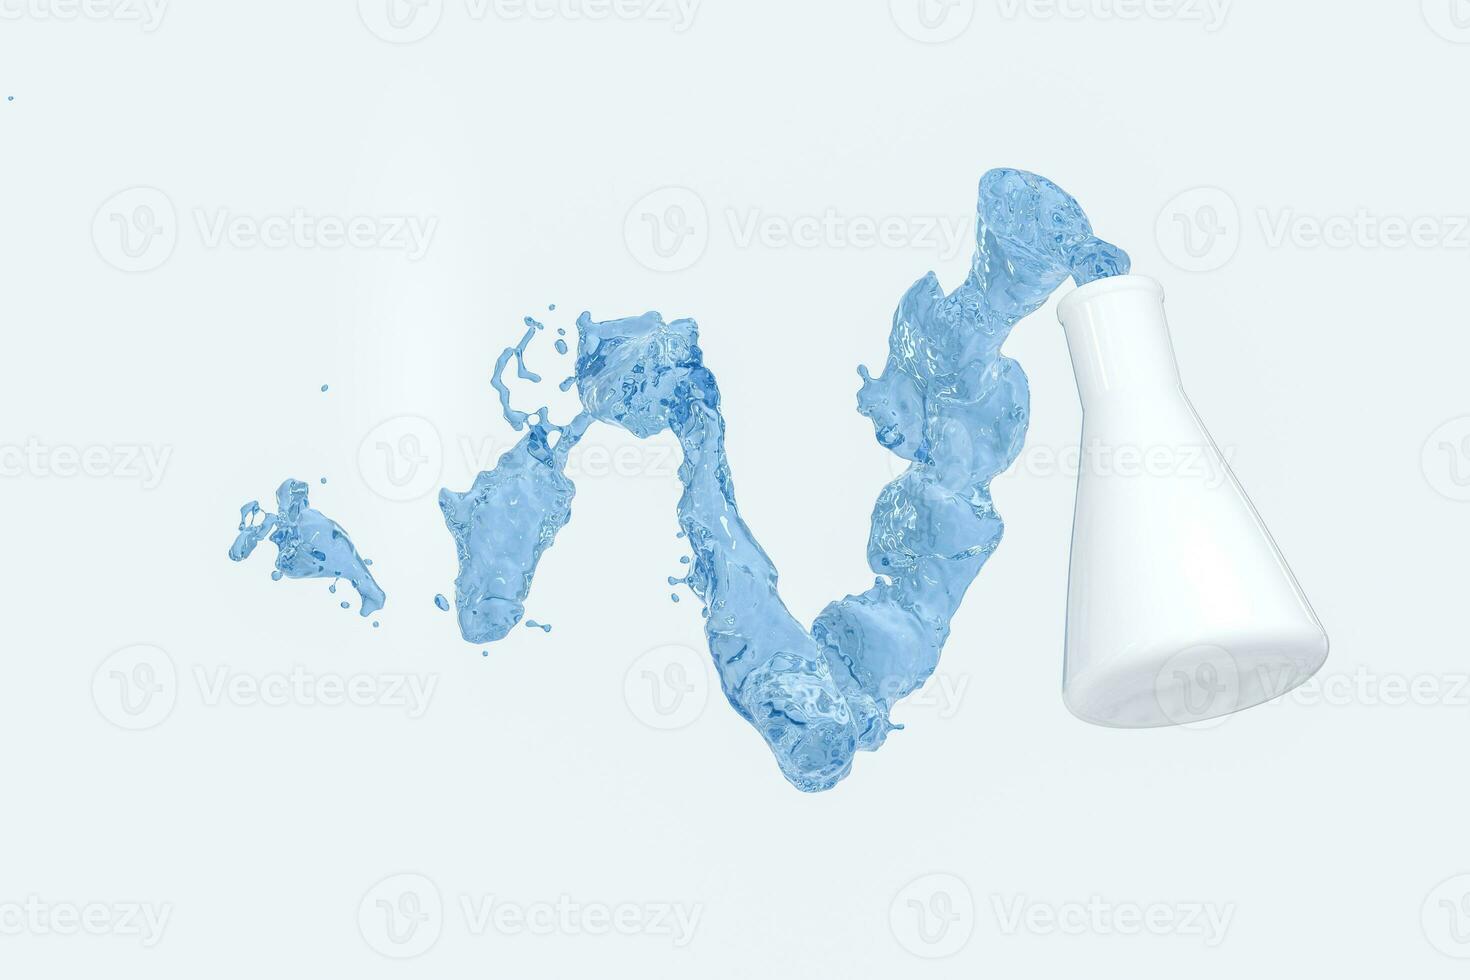 Chemical equipment bottle and splashing liquid, 3d rendering photo